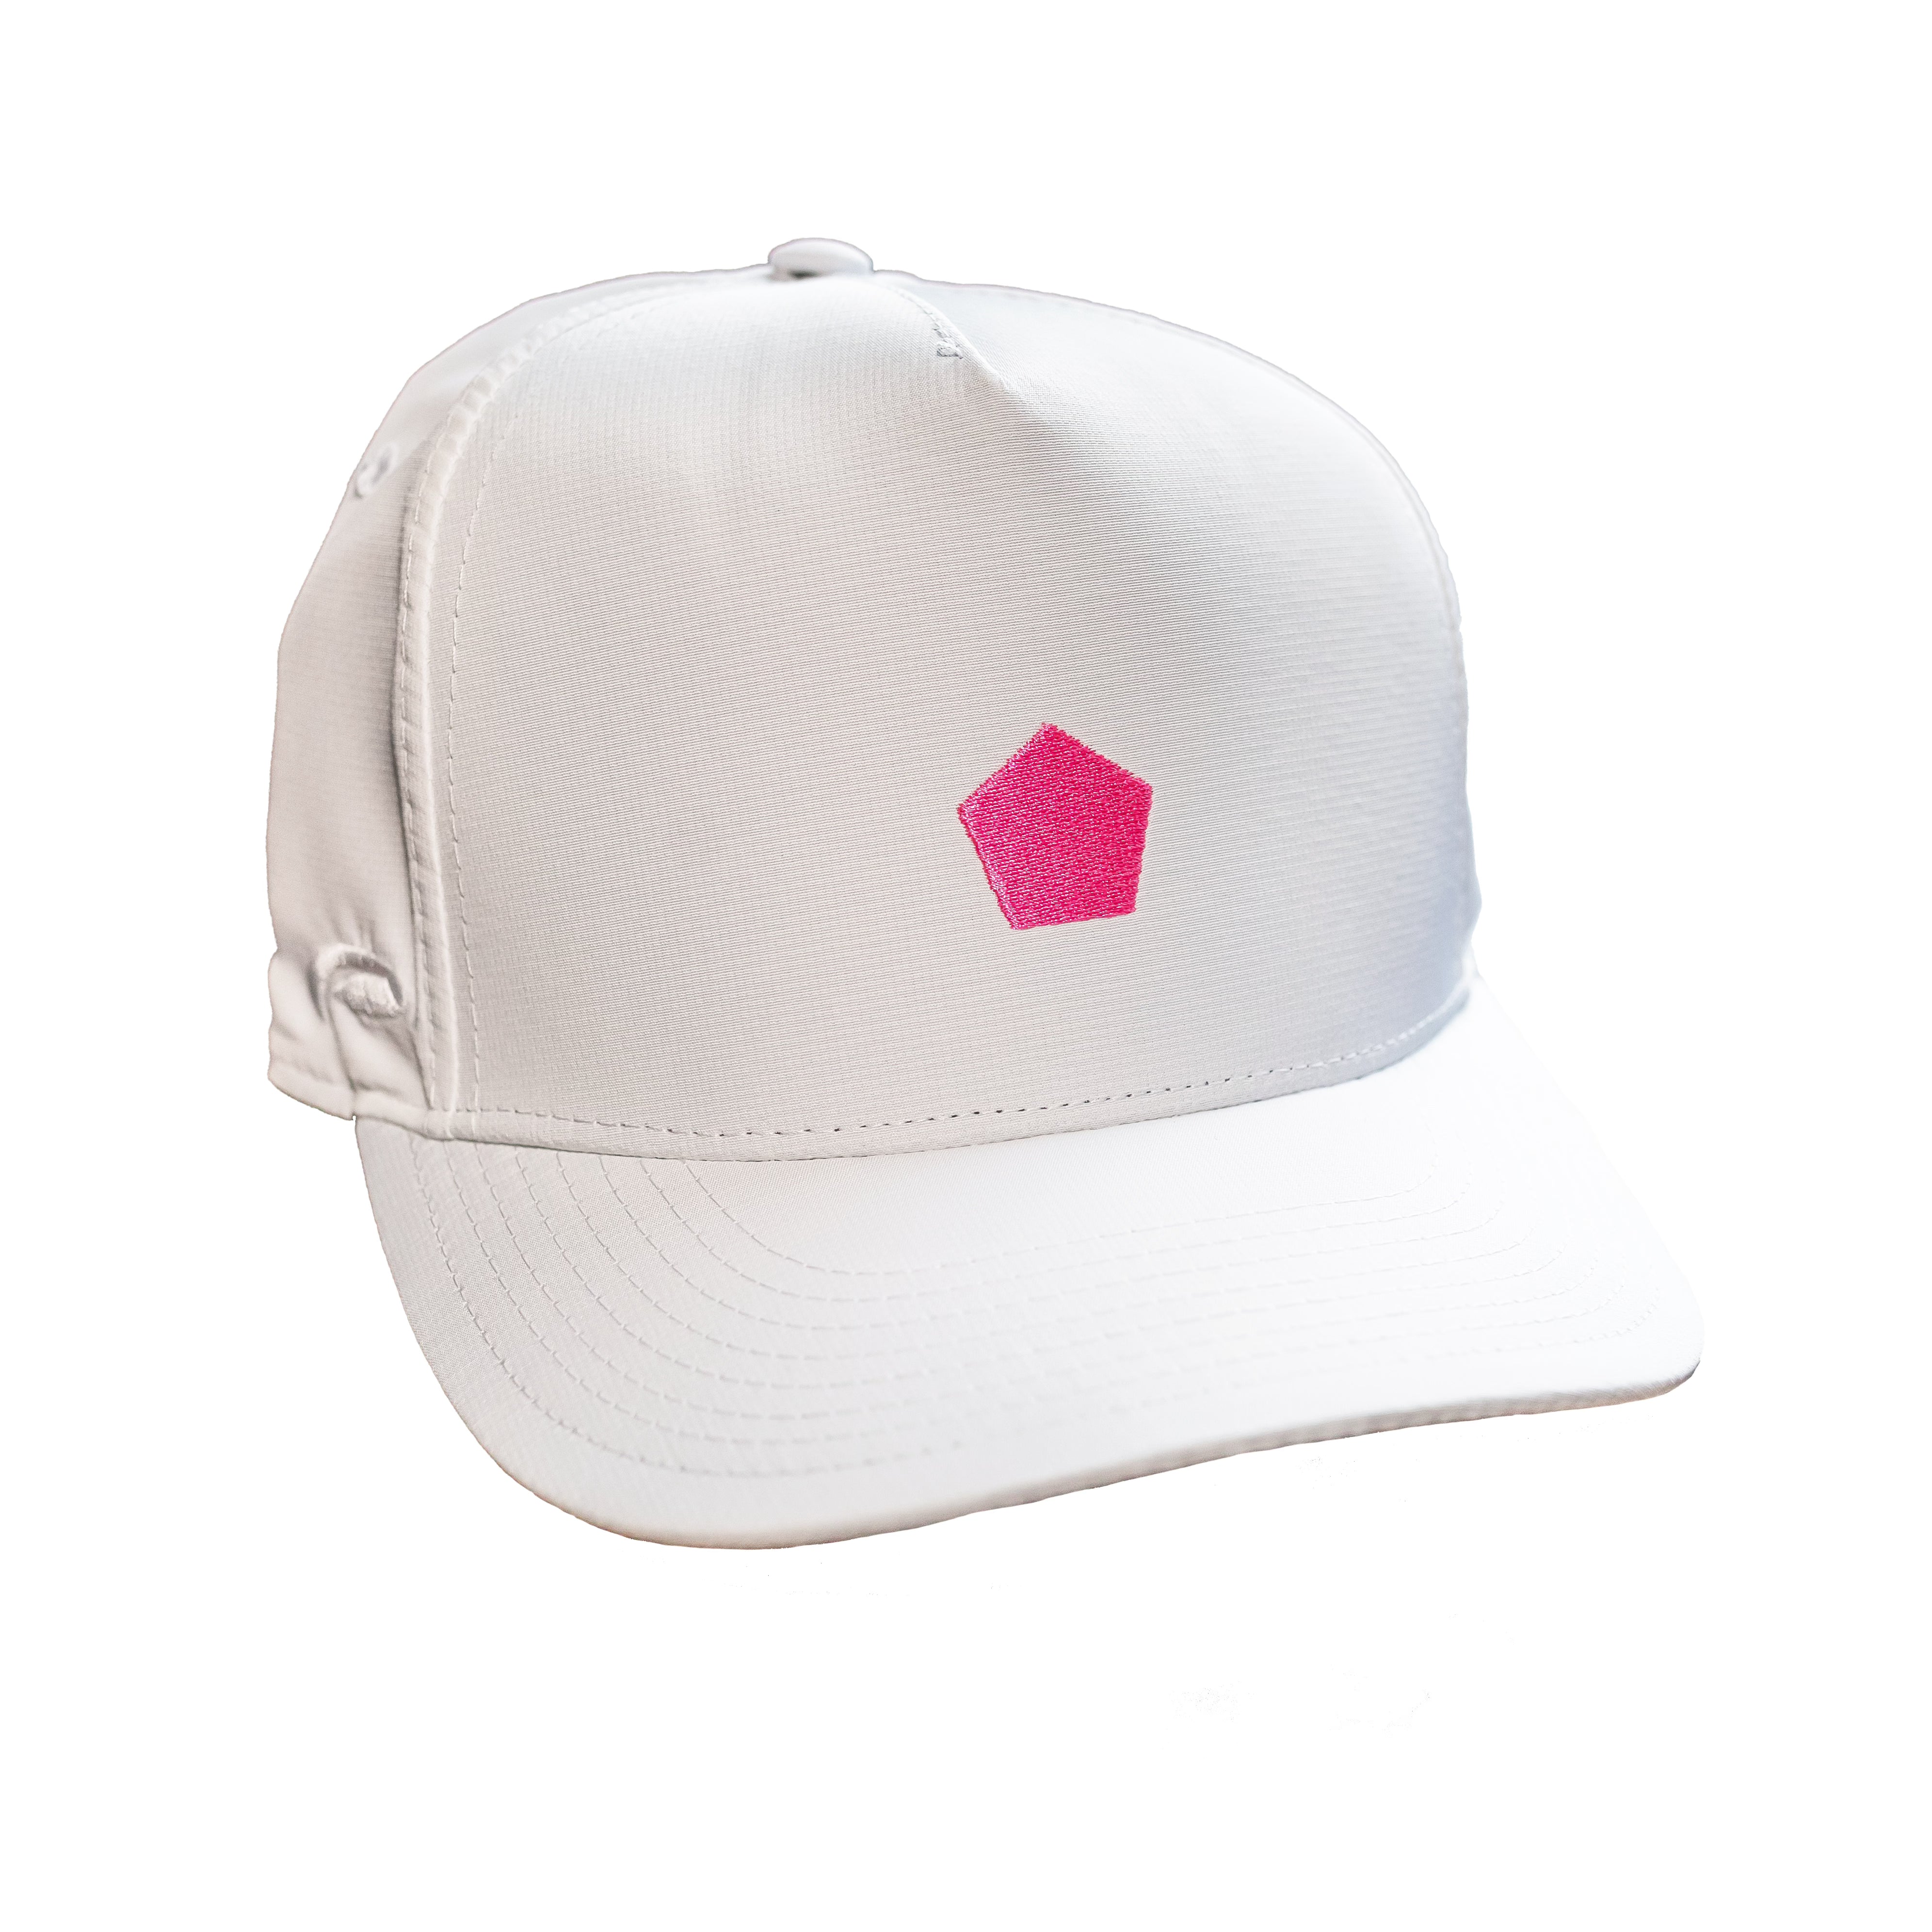 white pentagon coach hat